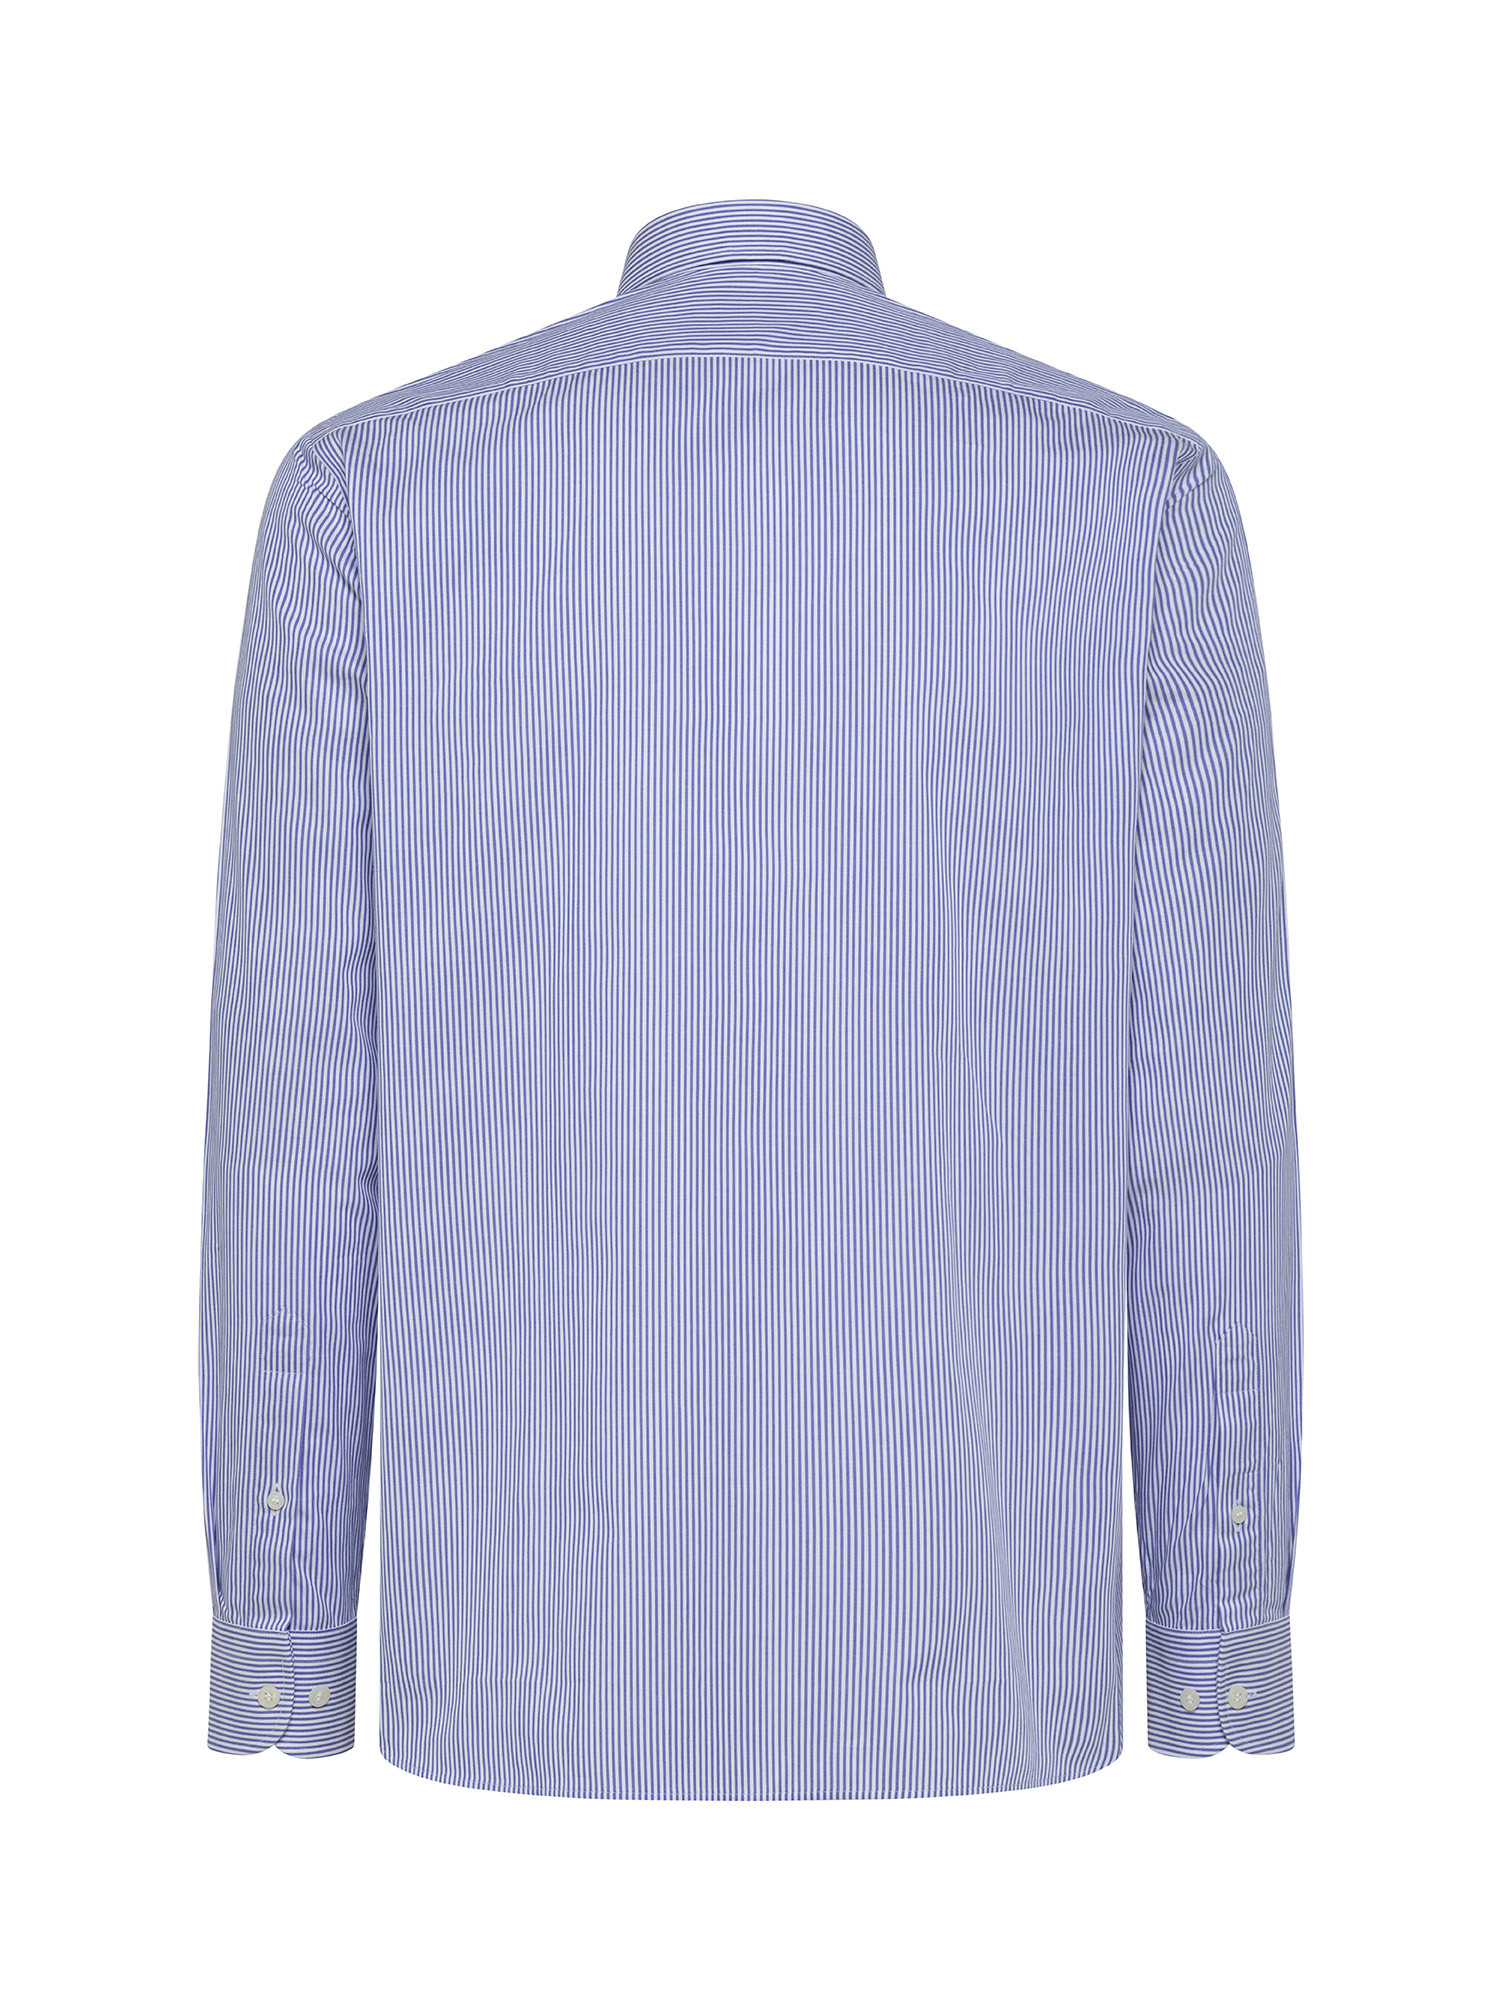 Camicia basic tailor fit in puro cotone, Blu chiaro, large image number 2